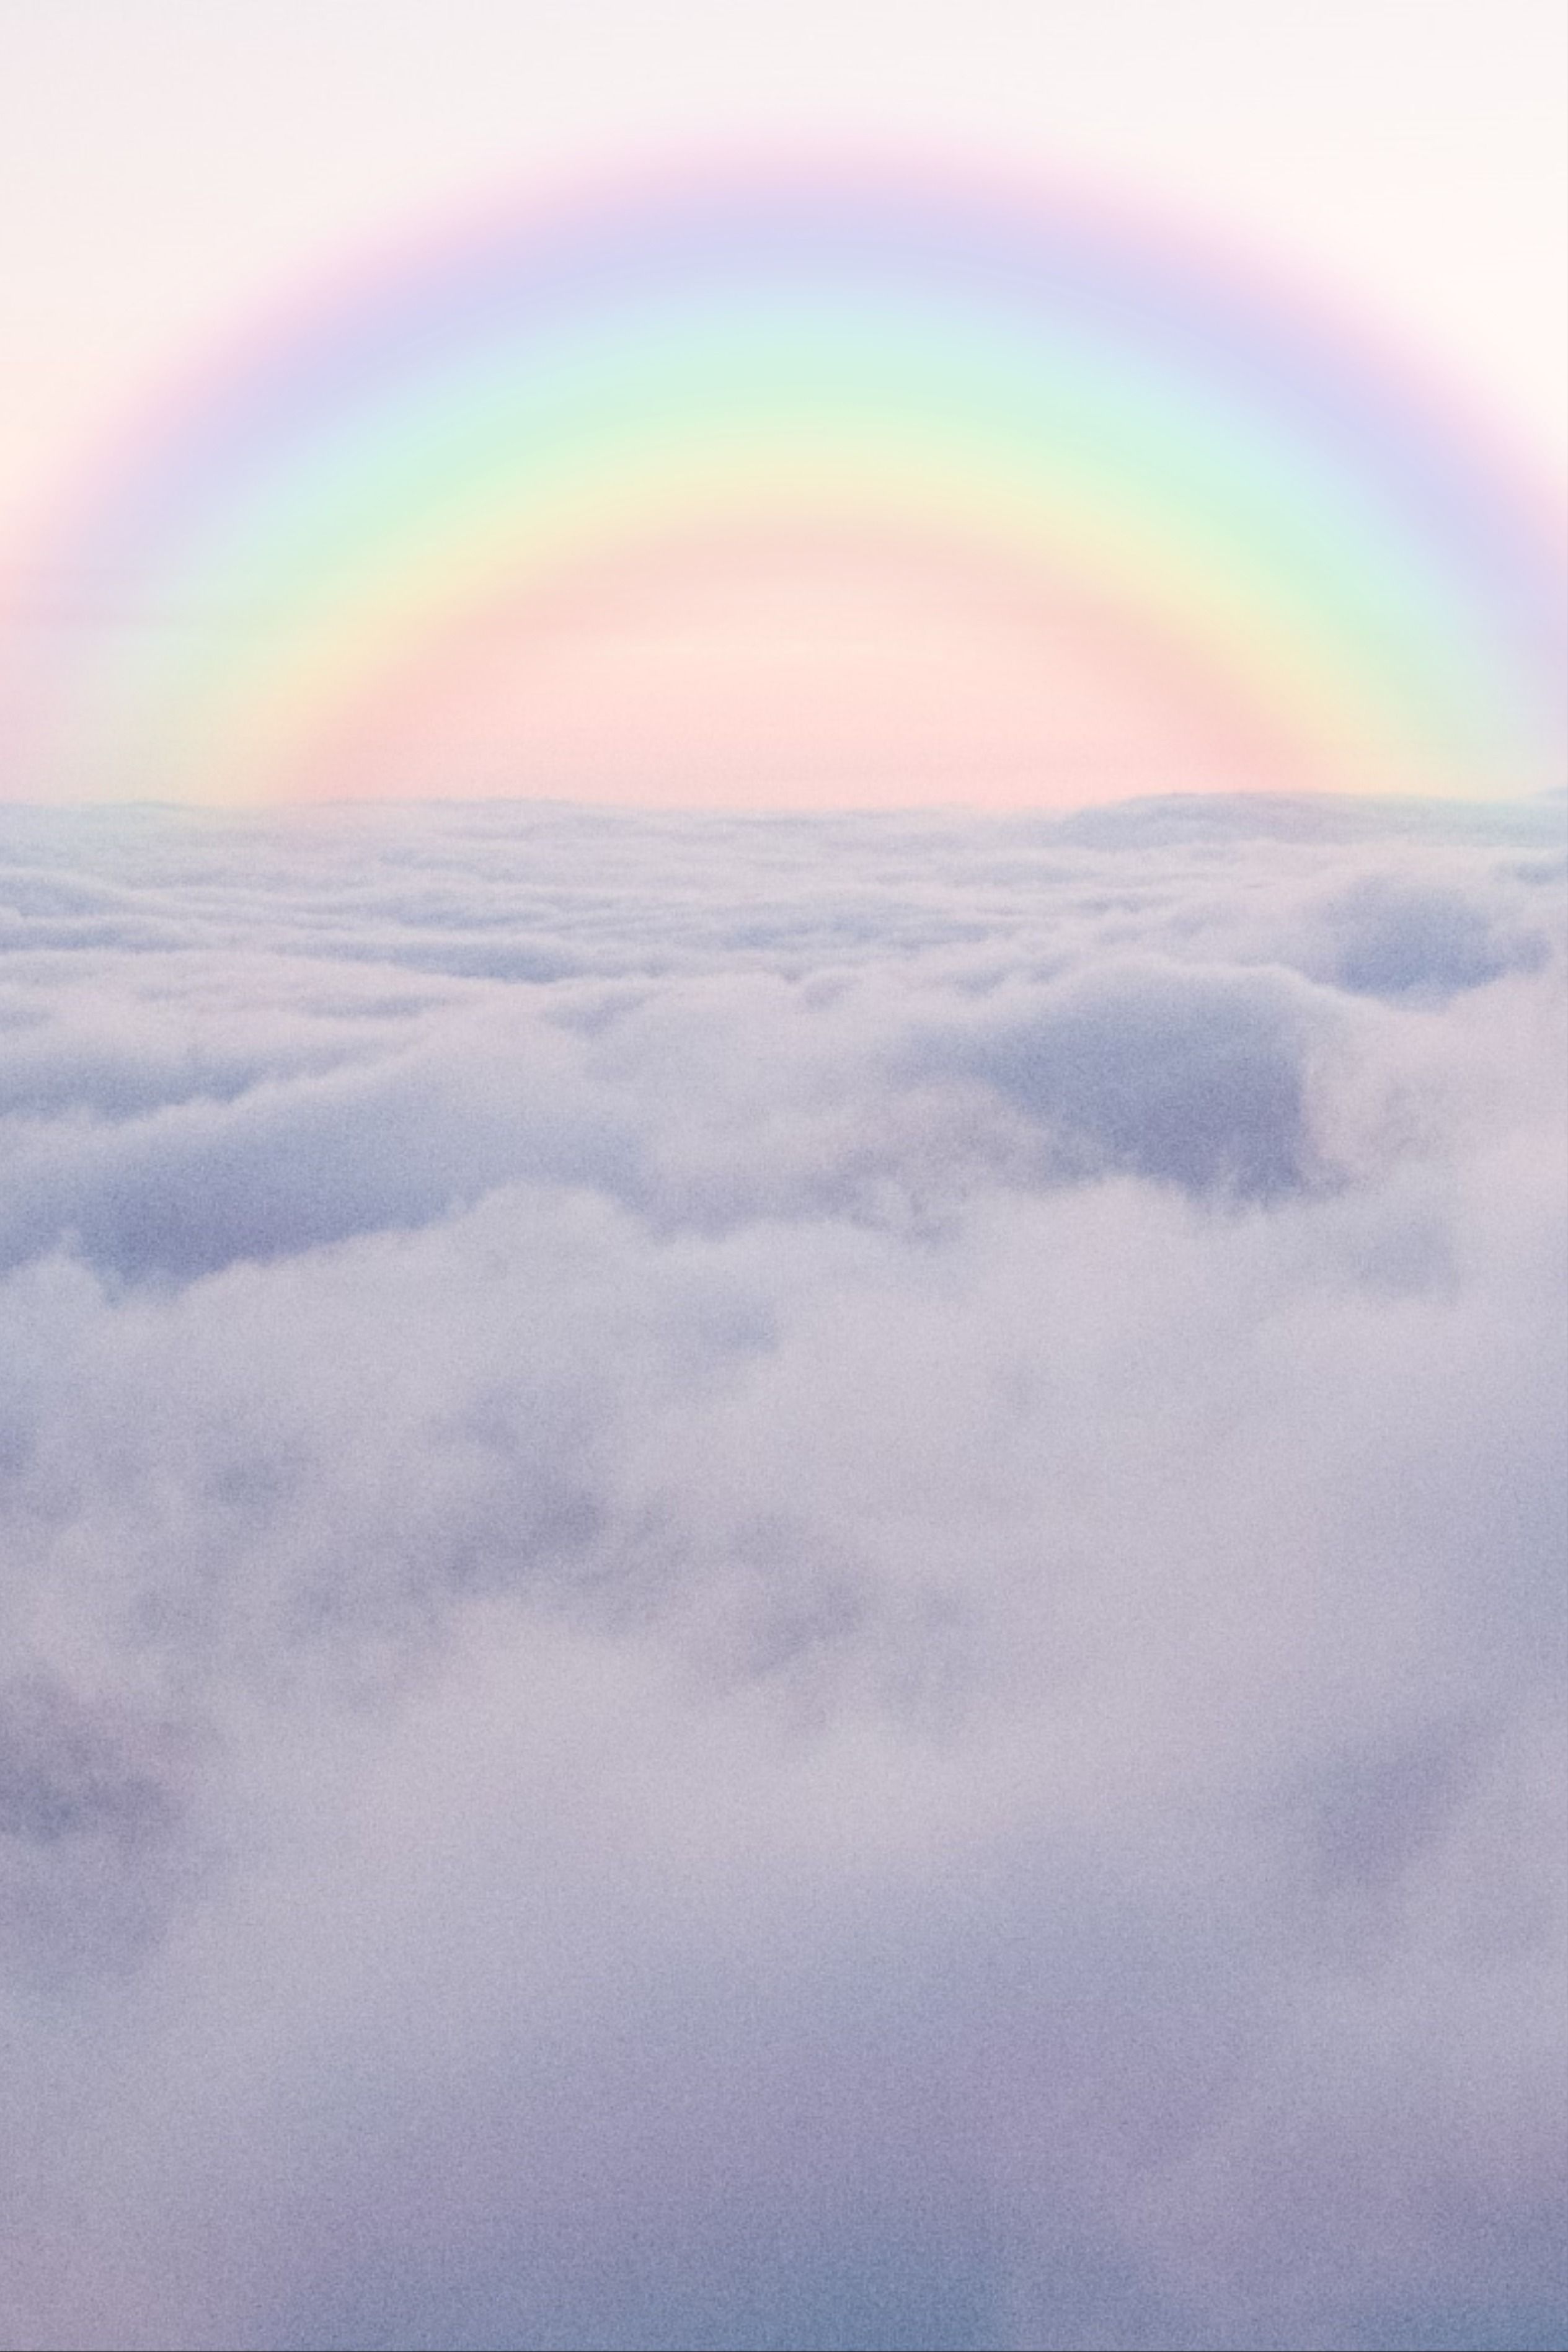 A rainbow is seen in the sky - Pastel rainbow, rainbows